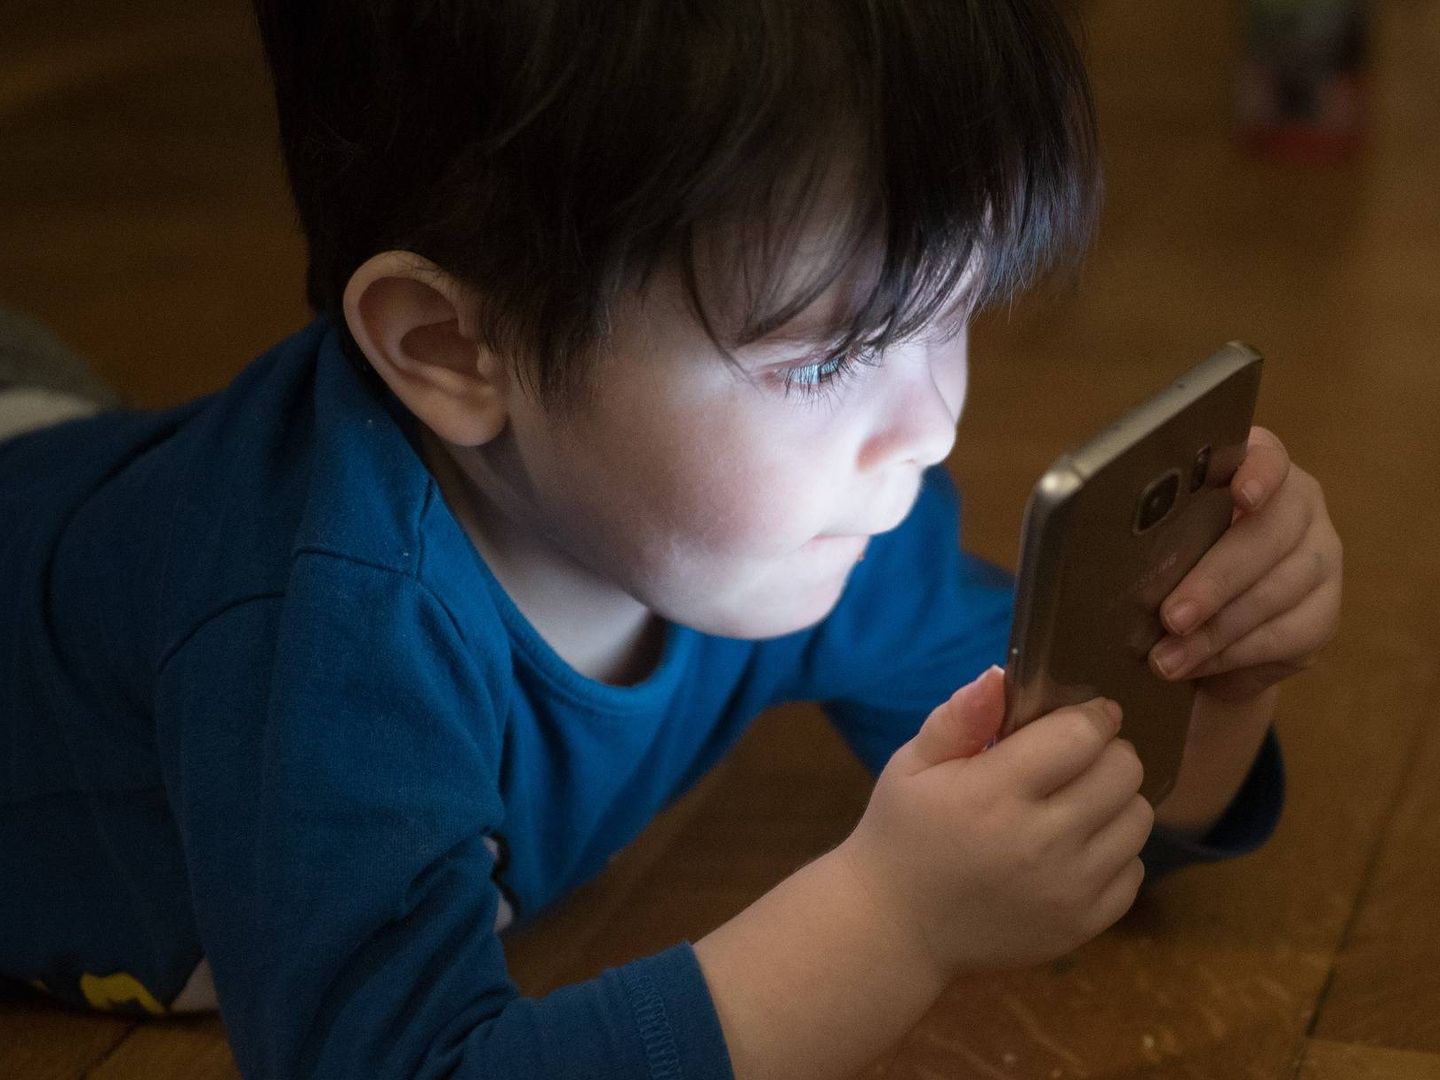 Un niño mira la pantalla de un teléfono móvil. (Pixabay)